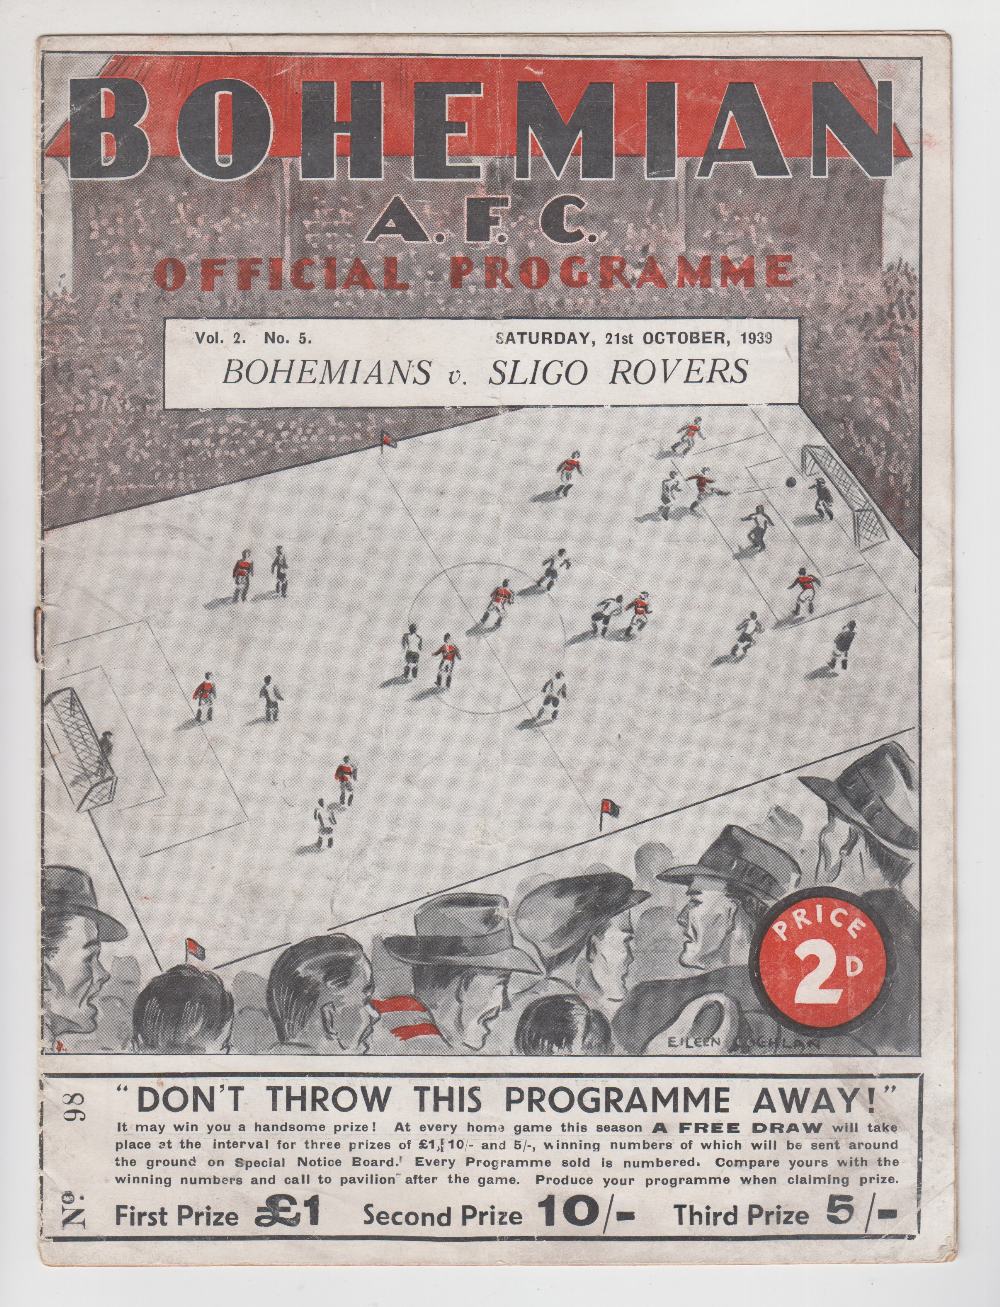 Football programme, Irish Republic, Bohemians v Sligo Rovers 21st Oct 1939, Football Shield of